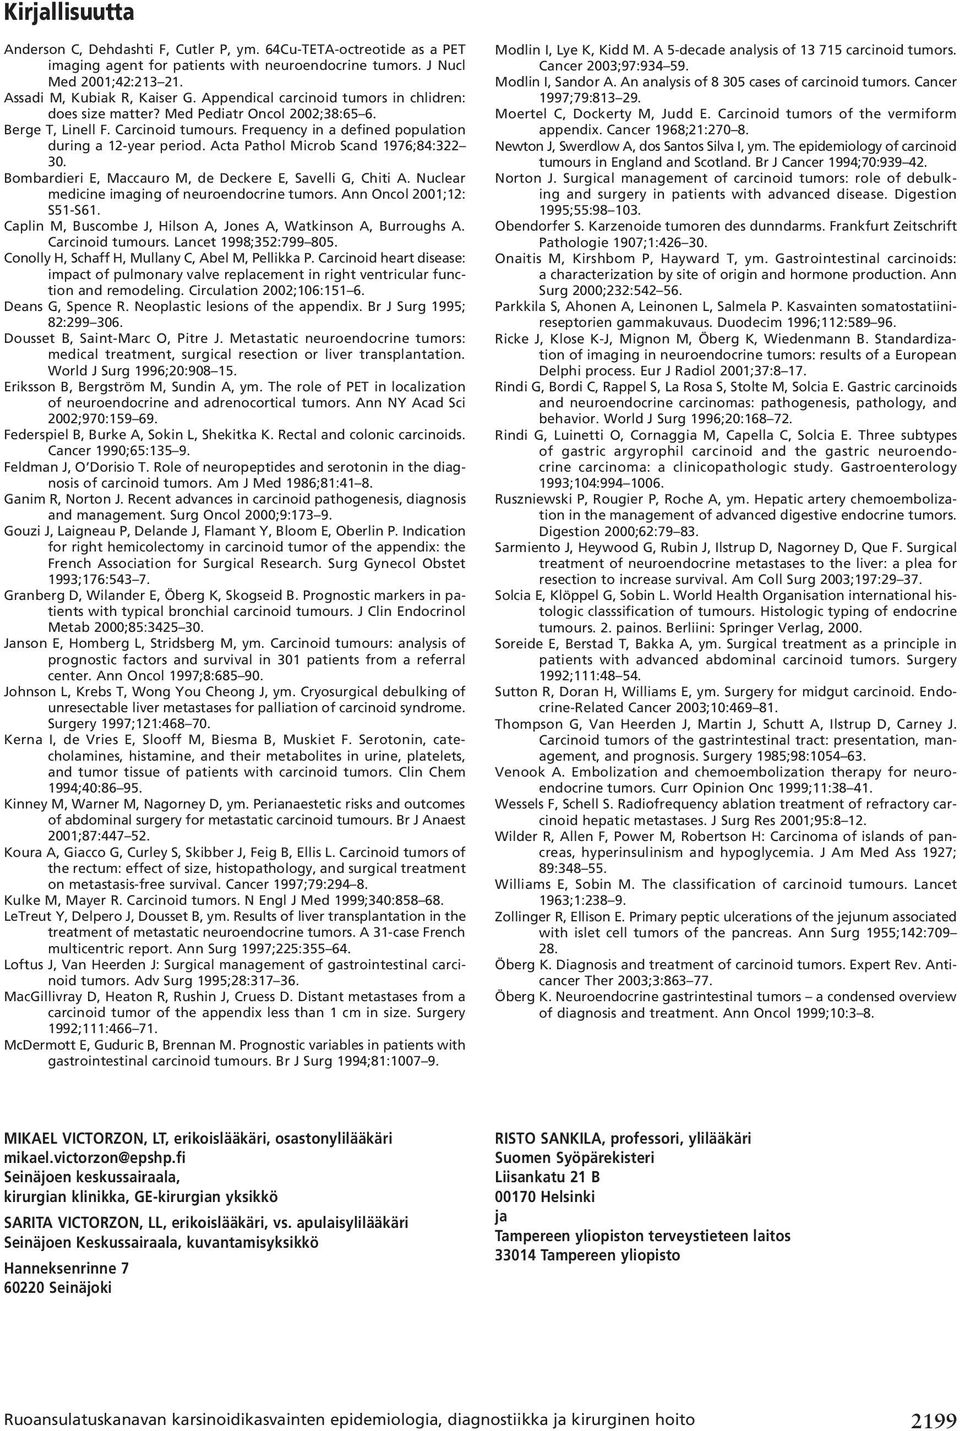 Acta Pathol Microb Scand 1976;84:322 30. Bombardieri E, Maccauro M, de Deckere E, Savelli G, Chiti A. Nuclear medicine imaging of neuroendocrine tumors. Ann Oncol 2001;12: S51-S61.